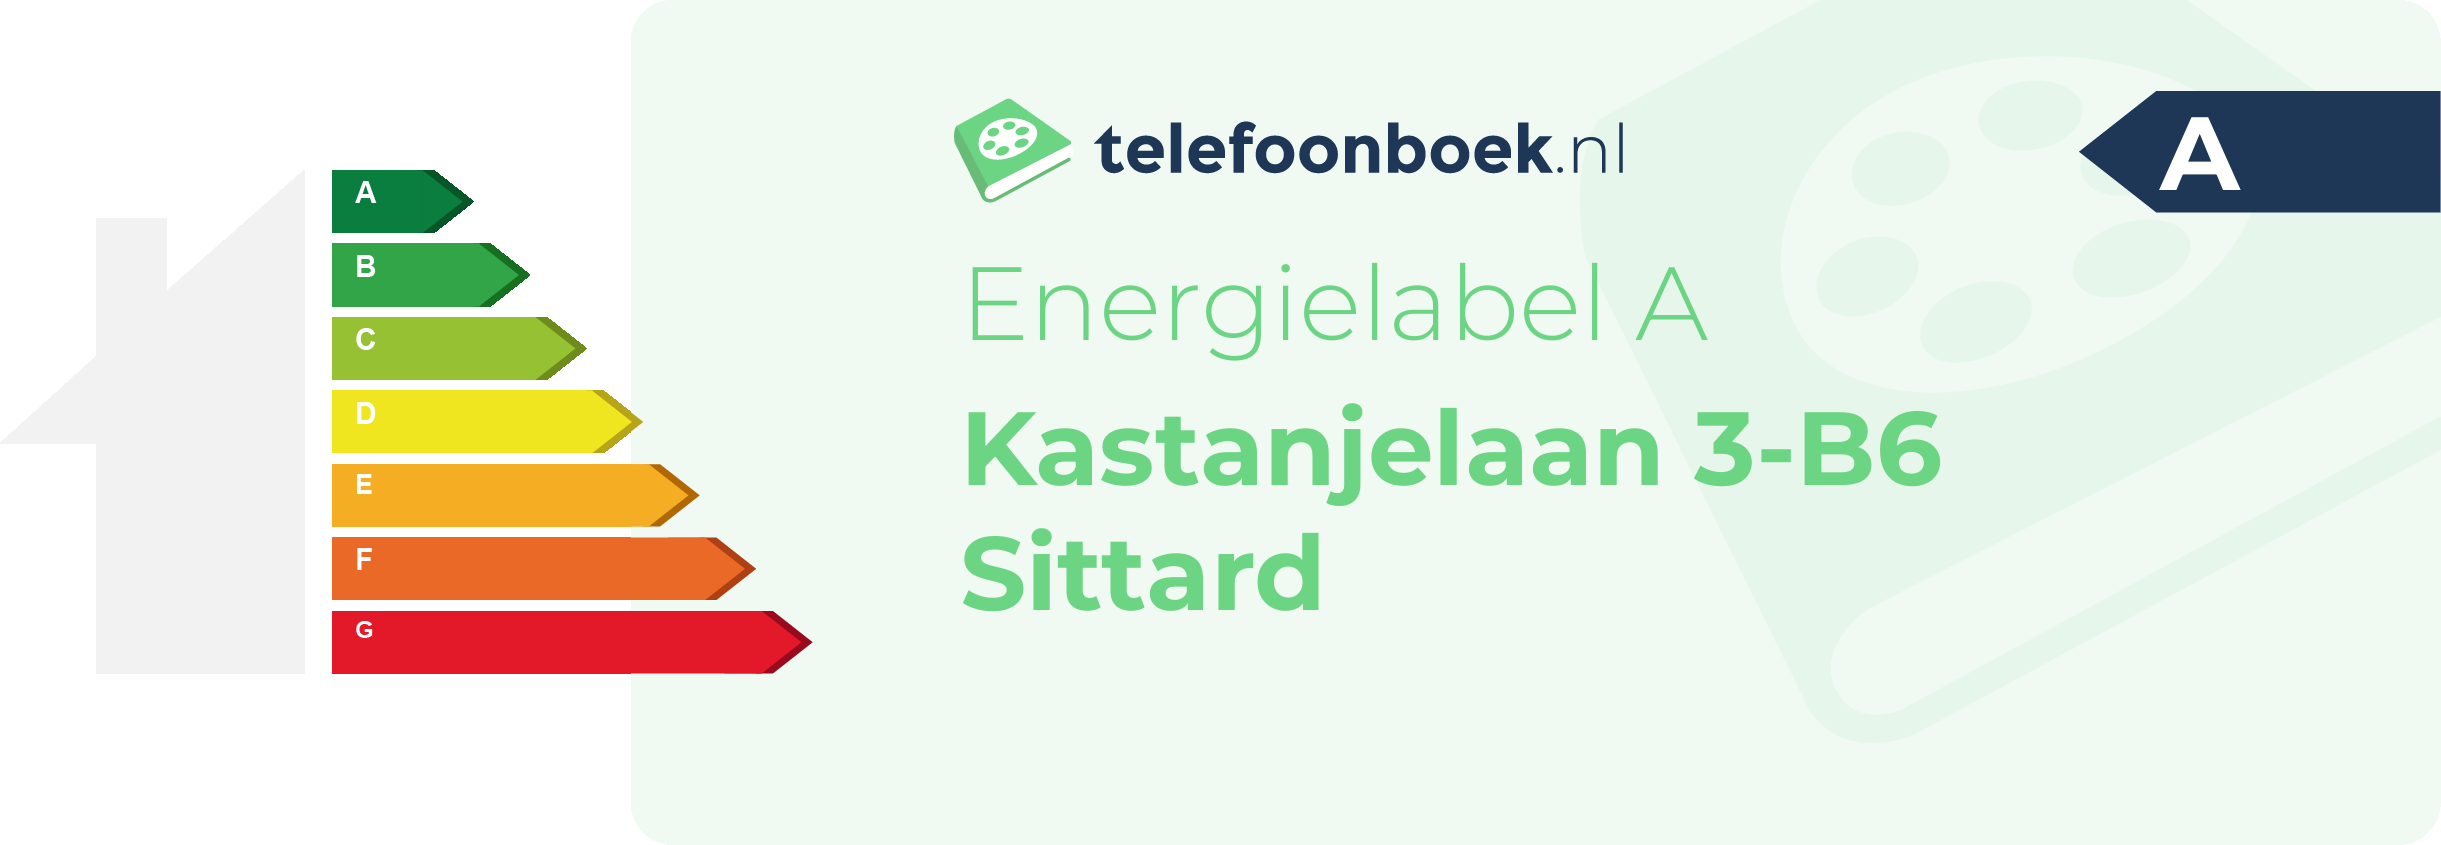 Energielabel Kastanjelaan 3-B6 Sittard